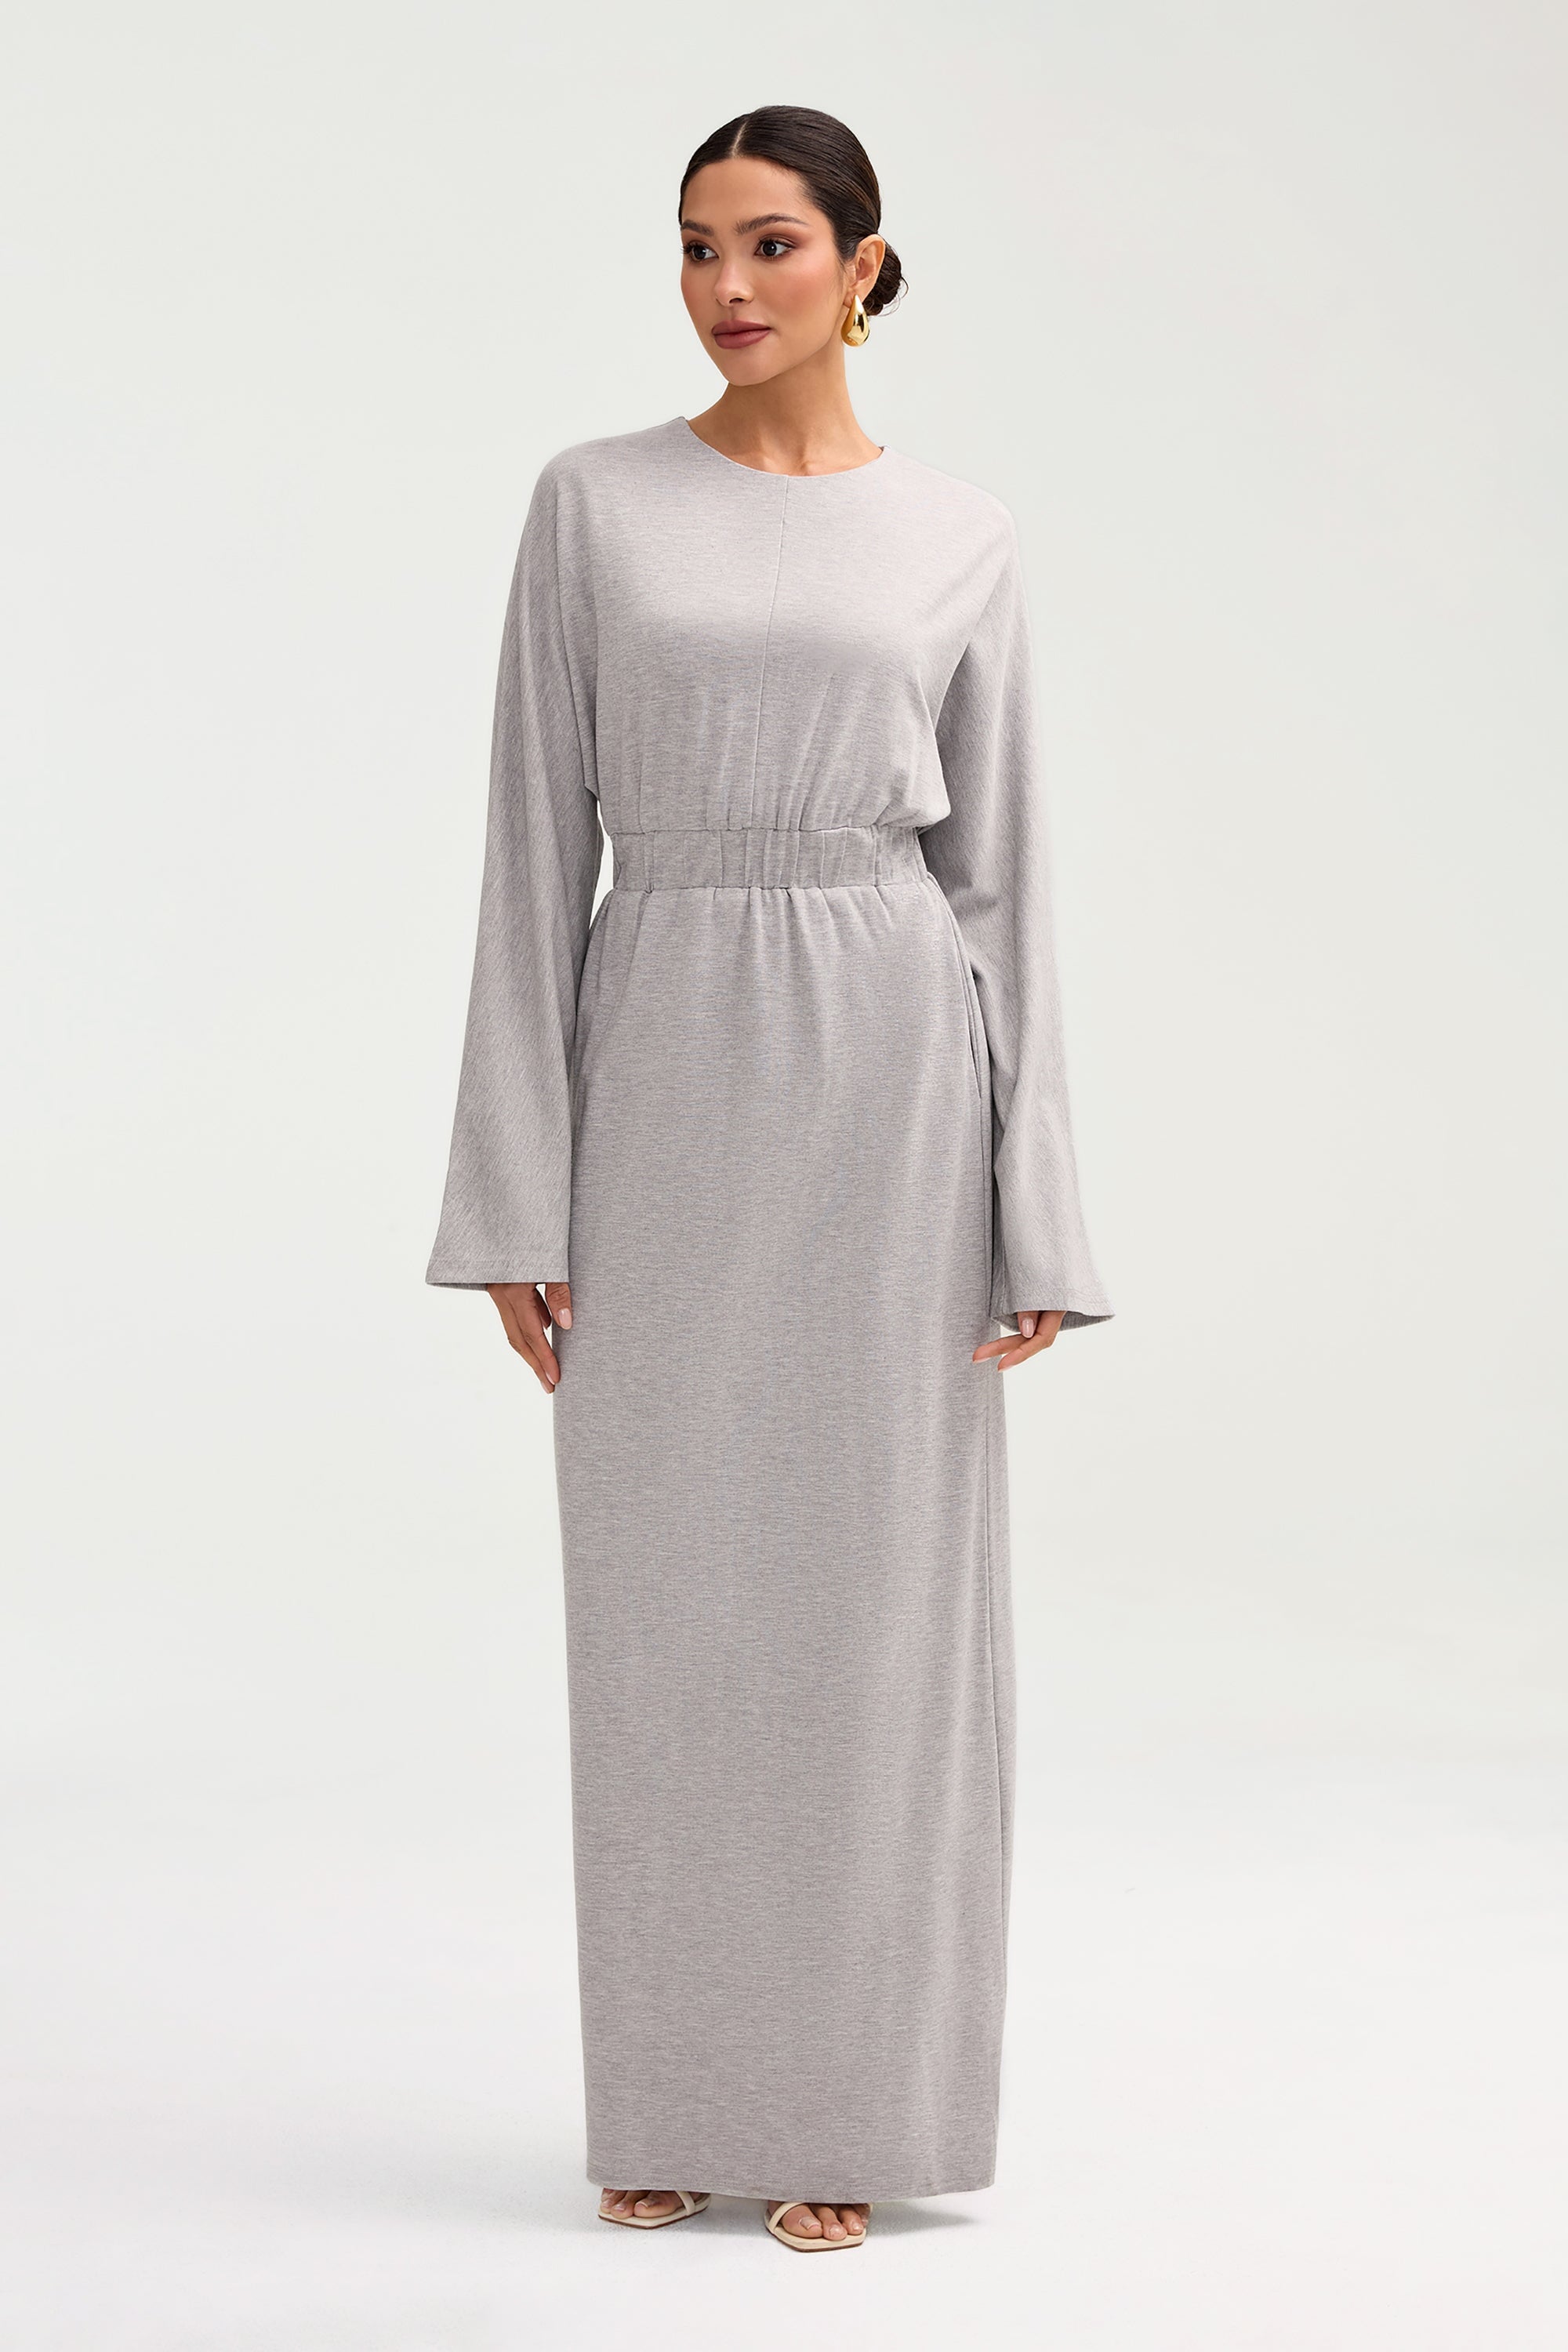 Adelynn Jersey Batwing Maxi Dress - Heather Grey Clothing Veiled 